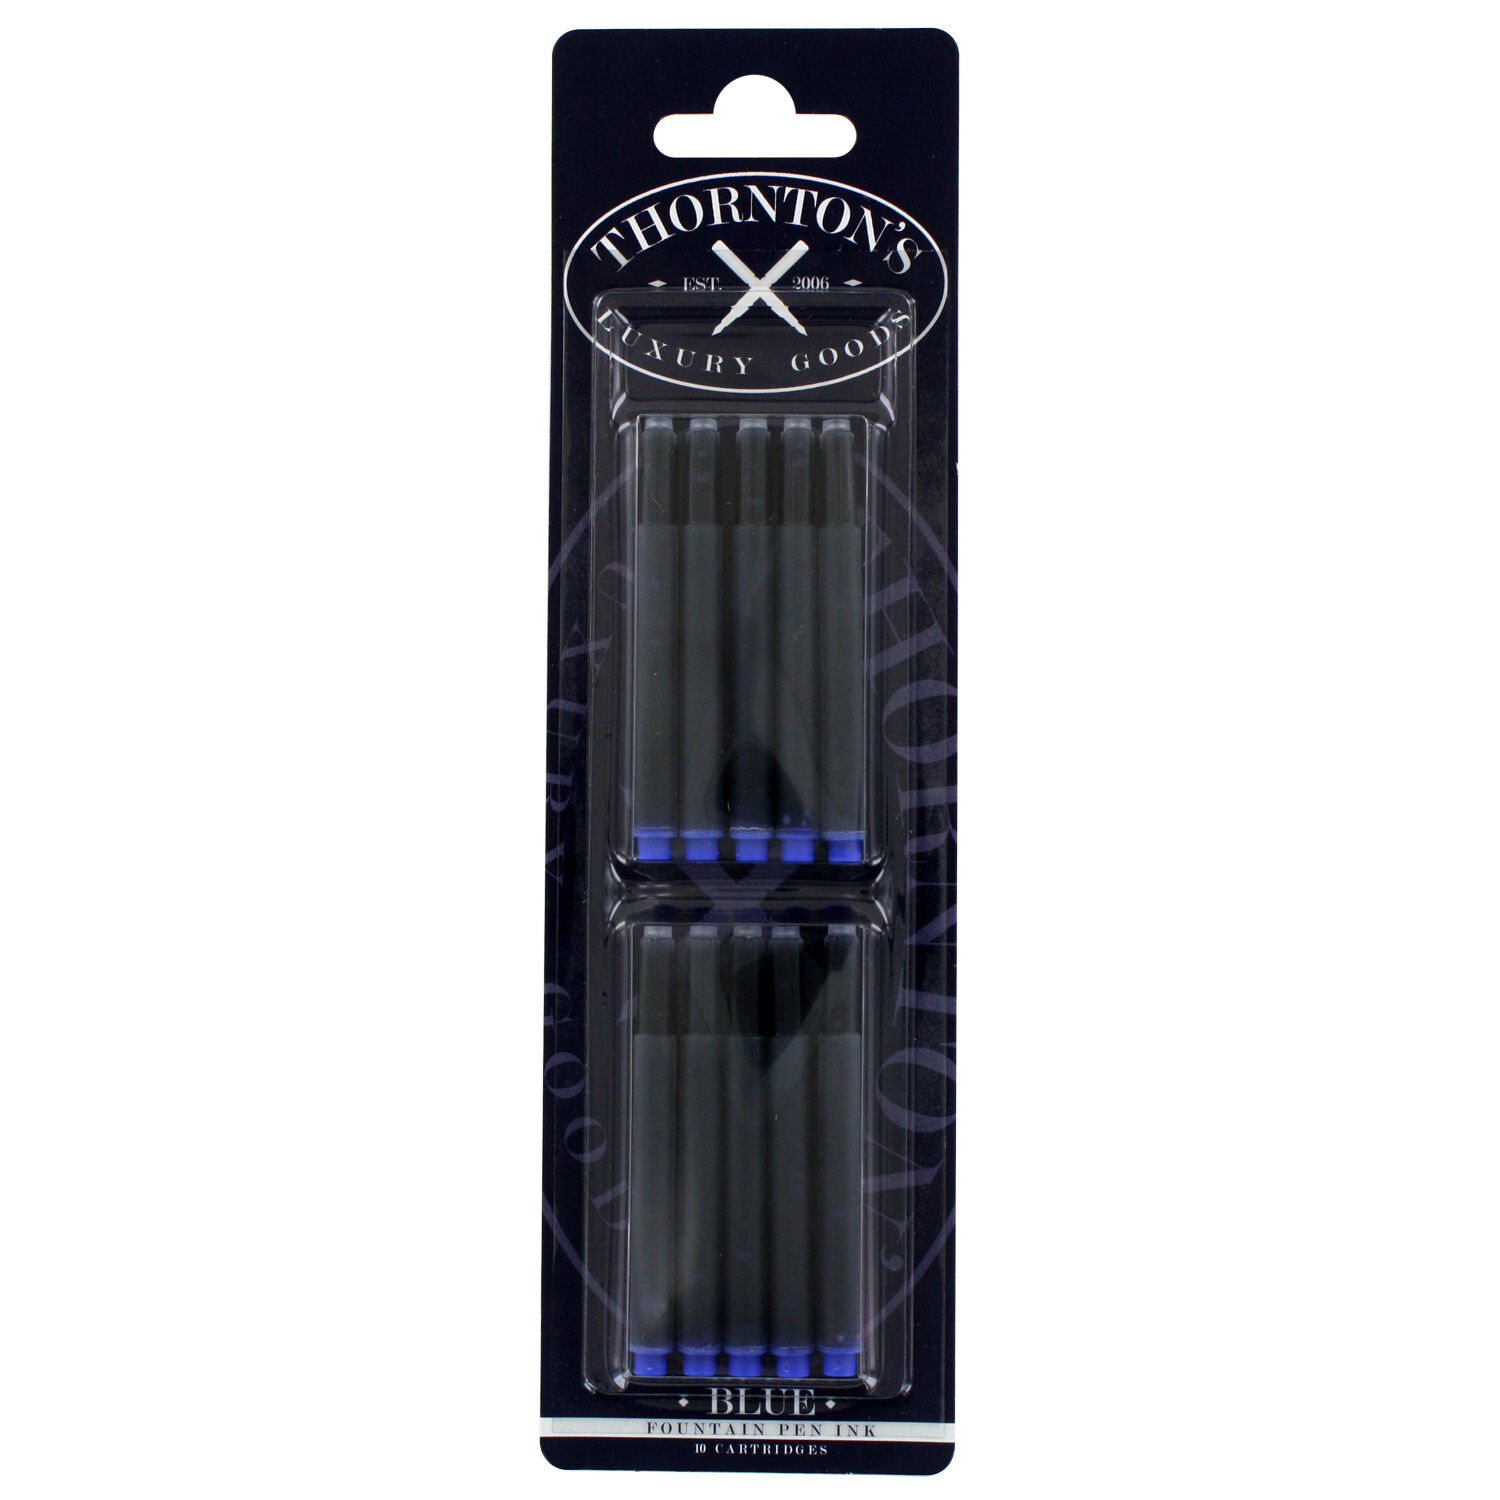 Thornton's Luxury Goods Fountain Pen Lamy® Ink Cartridges, Pack of 10 - Blue